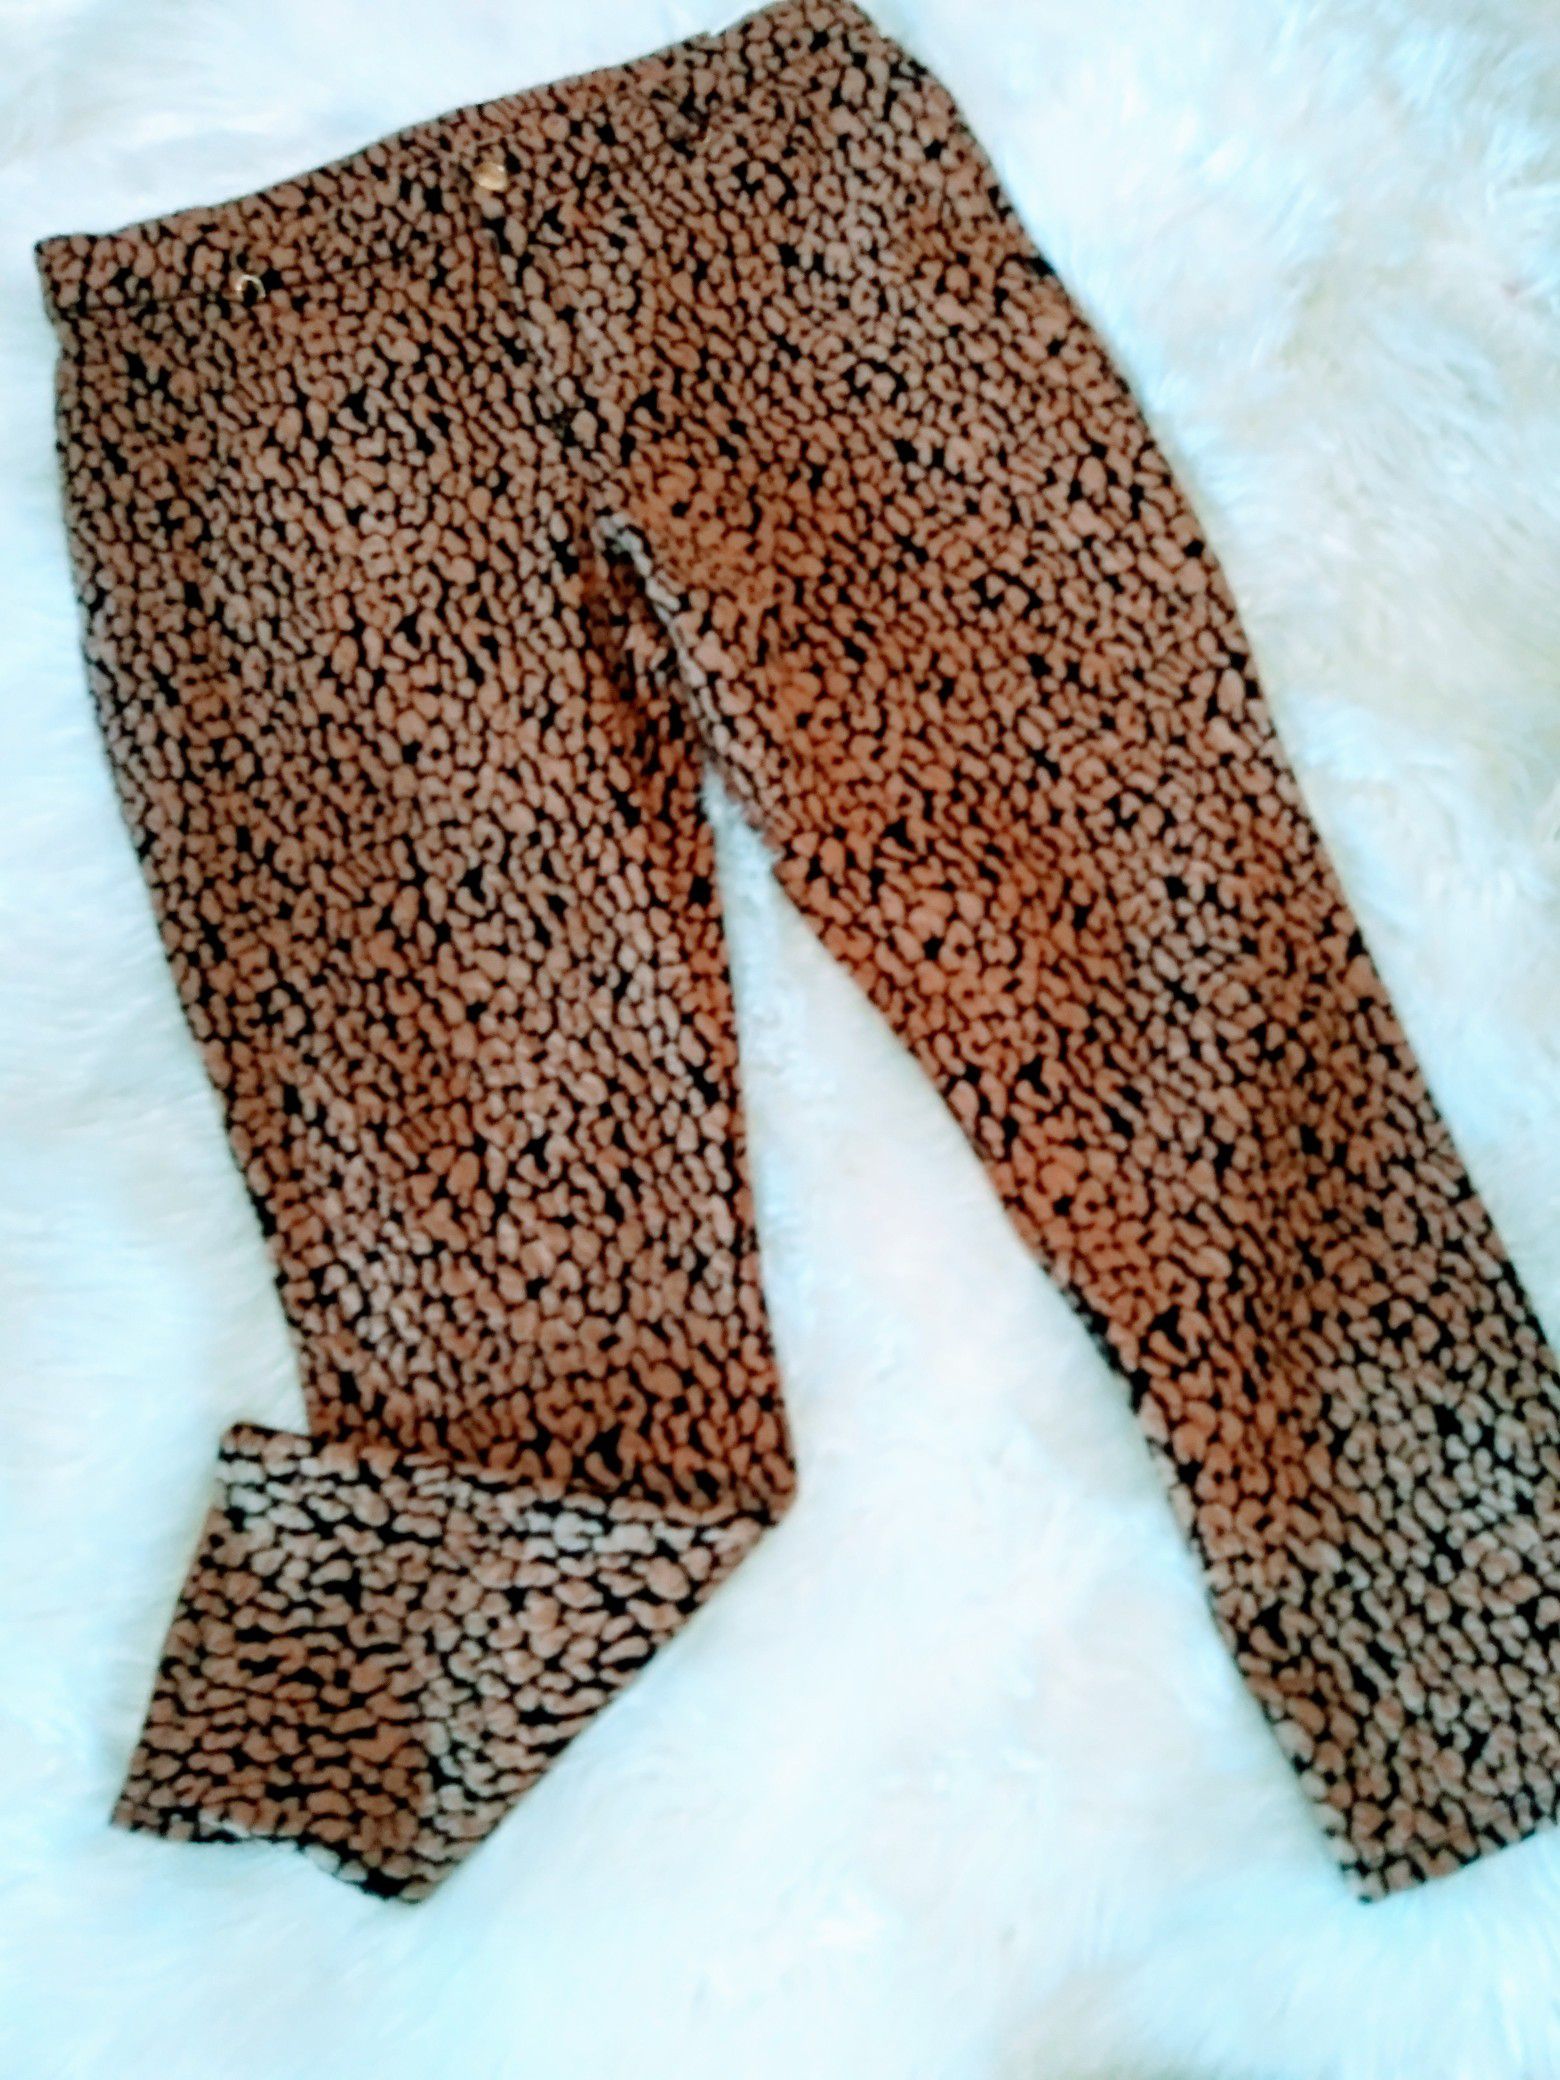 Leopard Slacks/Pants